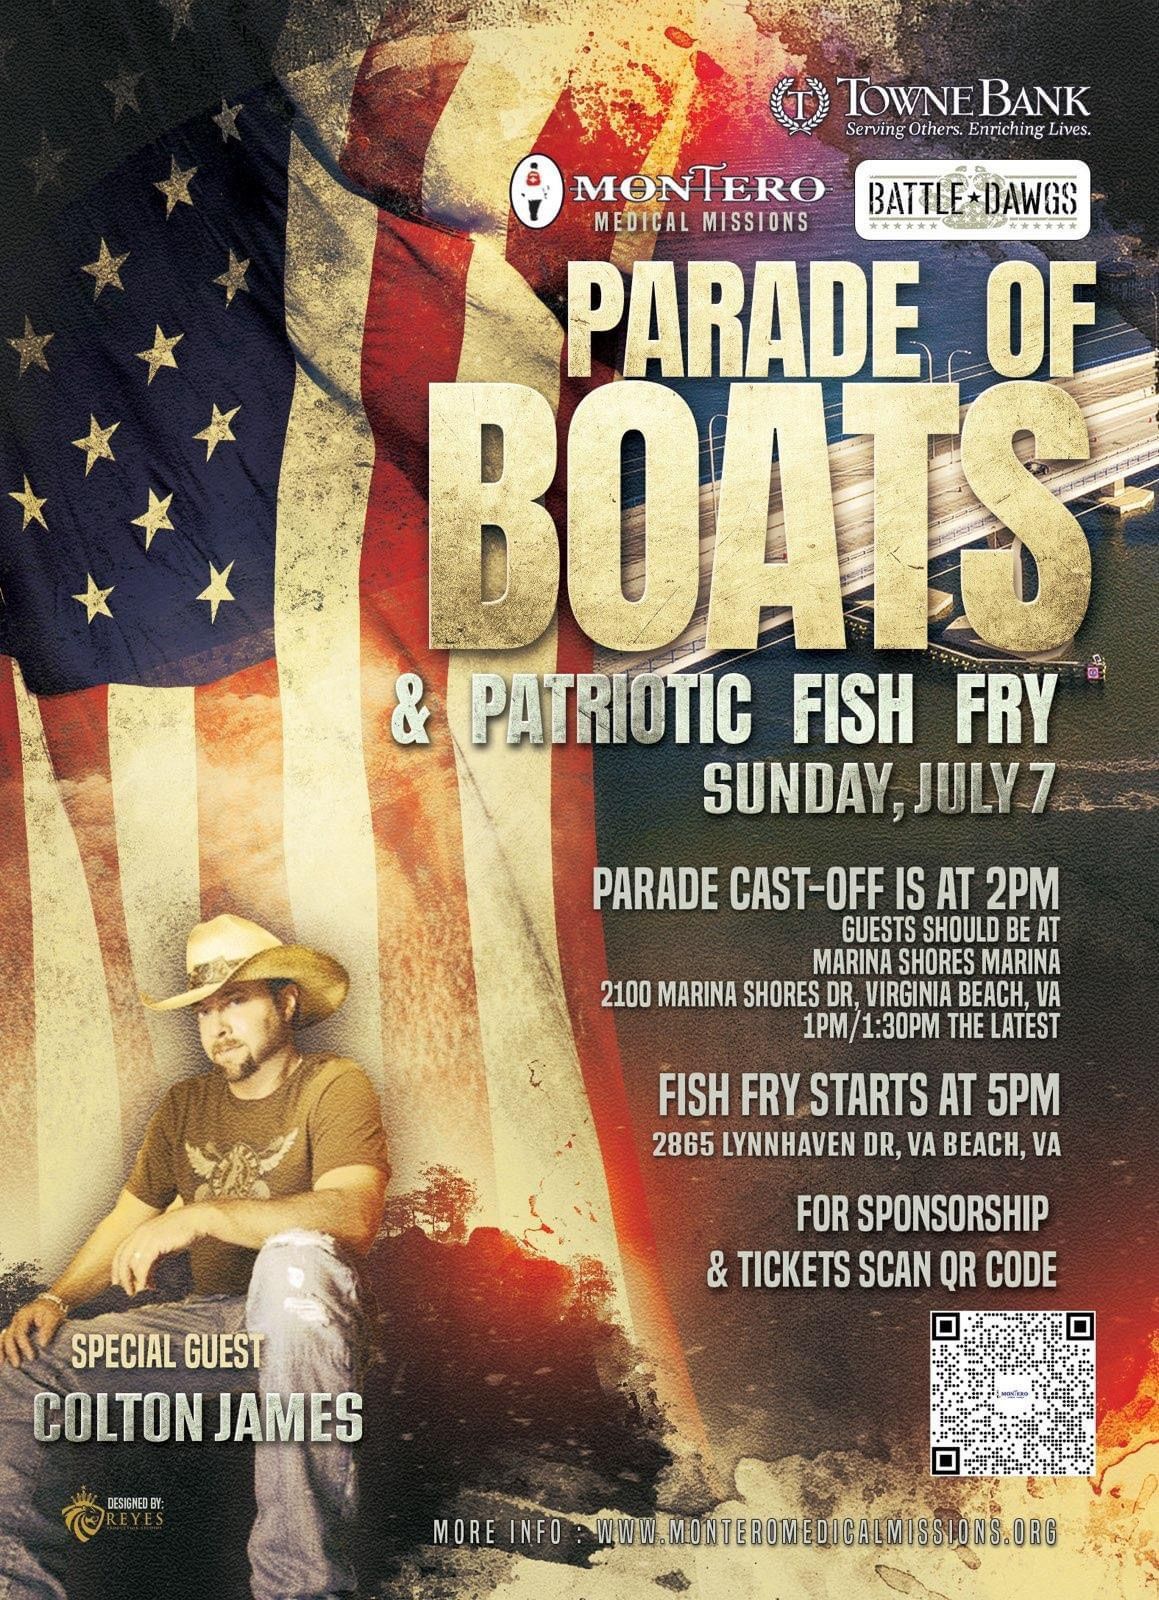 MMM Parade of Boats & Patriotic Fish Fry \ud83d\udee5\ufe0f \ud83d\udc1f \ud83c\uddfa\ud83c\uddf8 